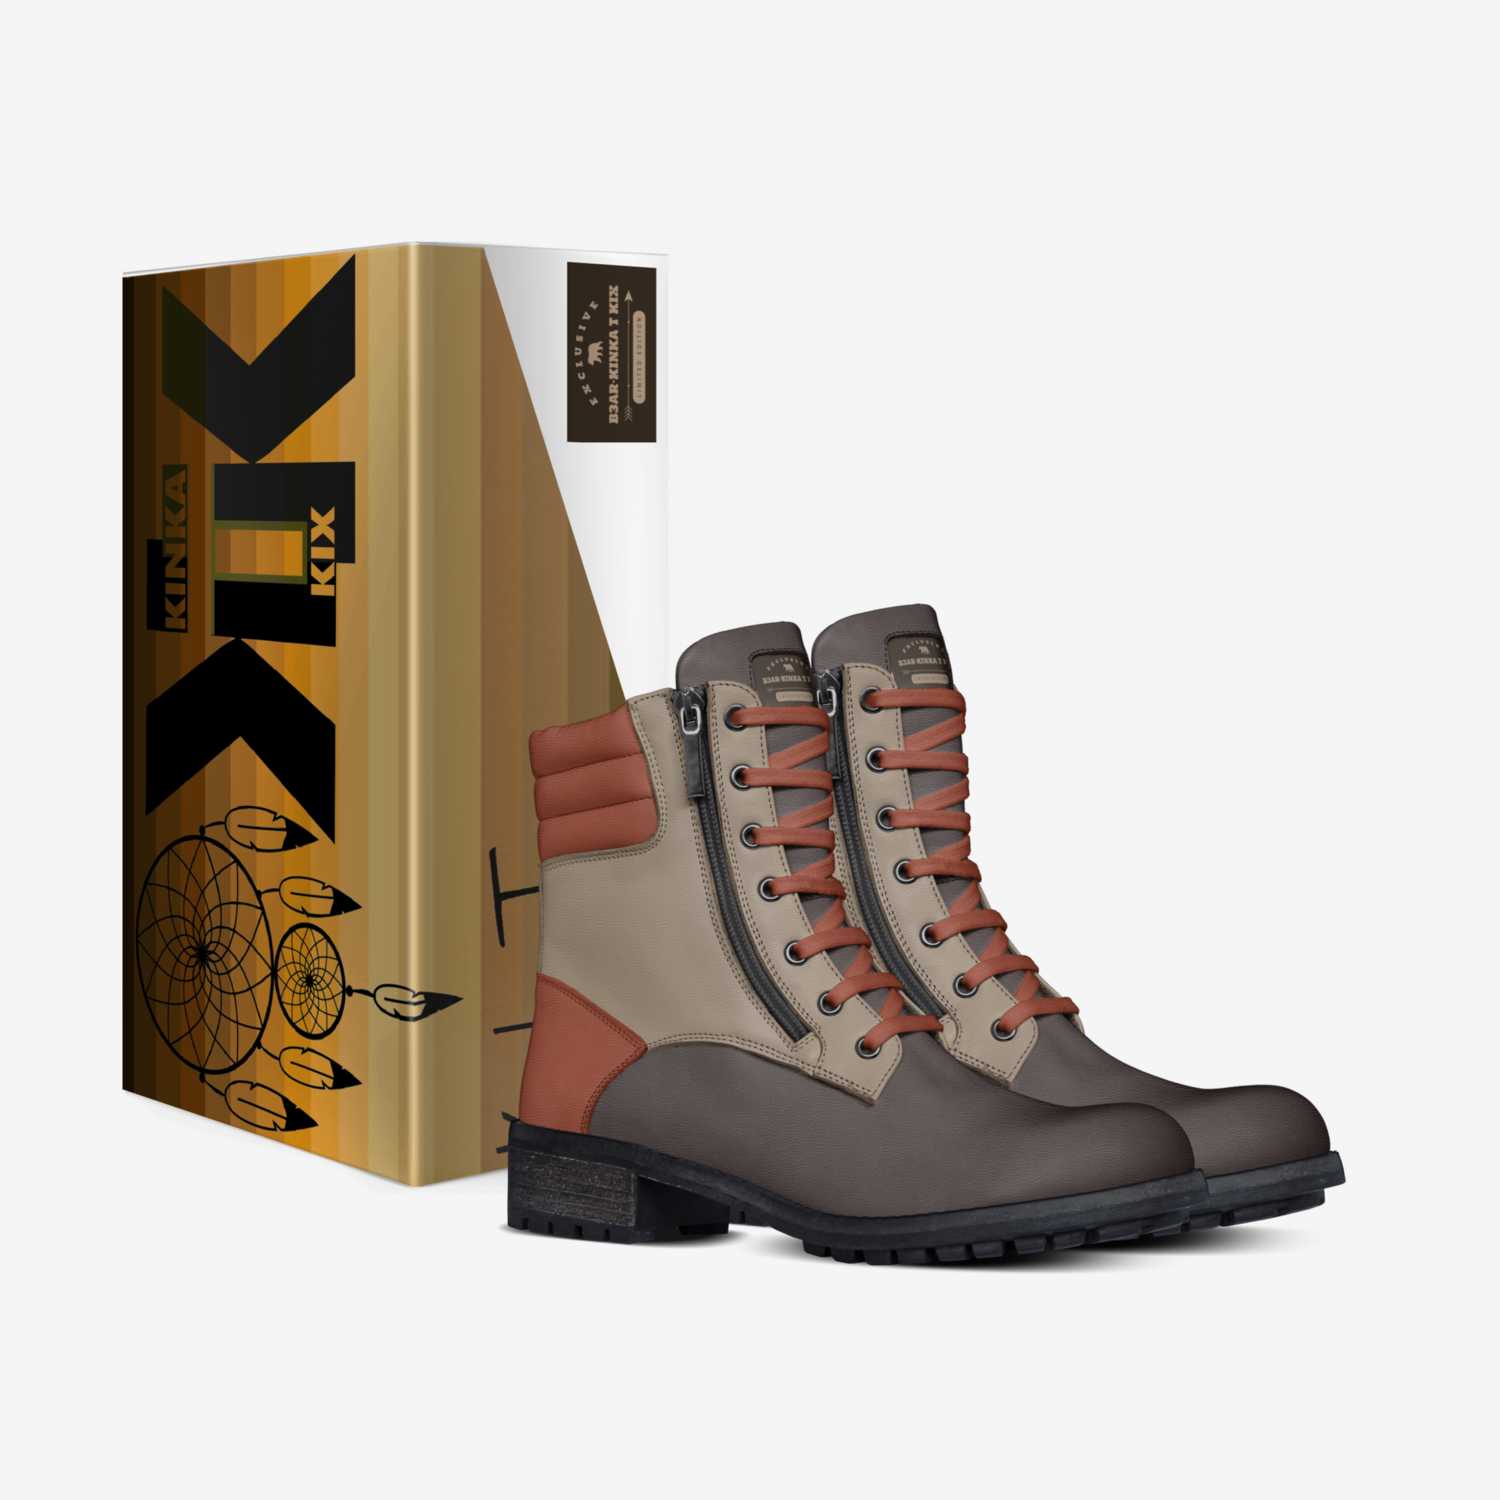 B3AR-Kinka T Kix custom made in Italy shoes by Kinka T Kix | Box view